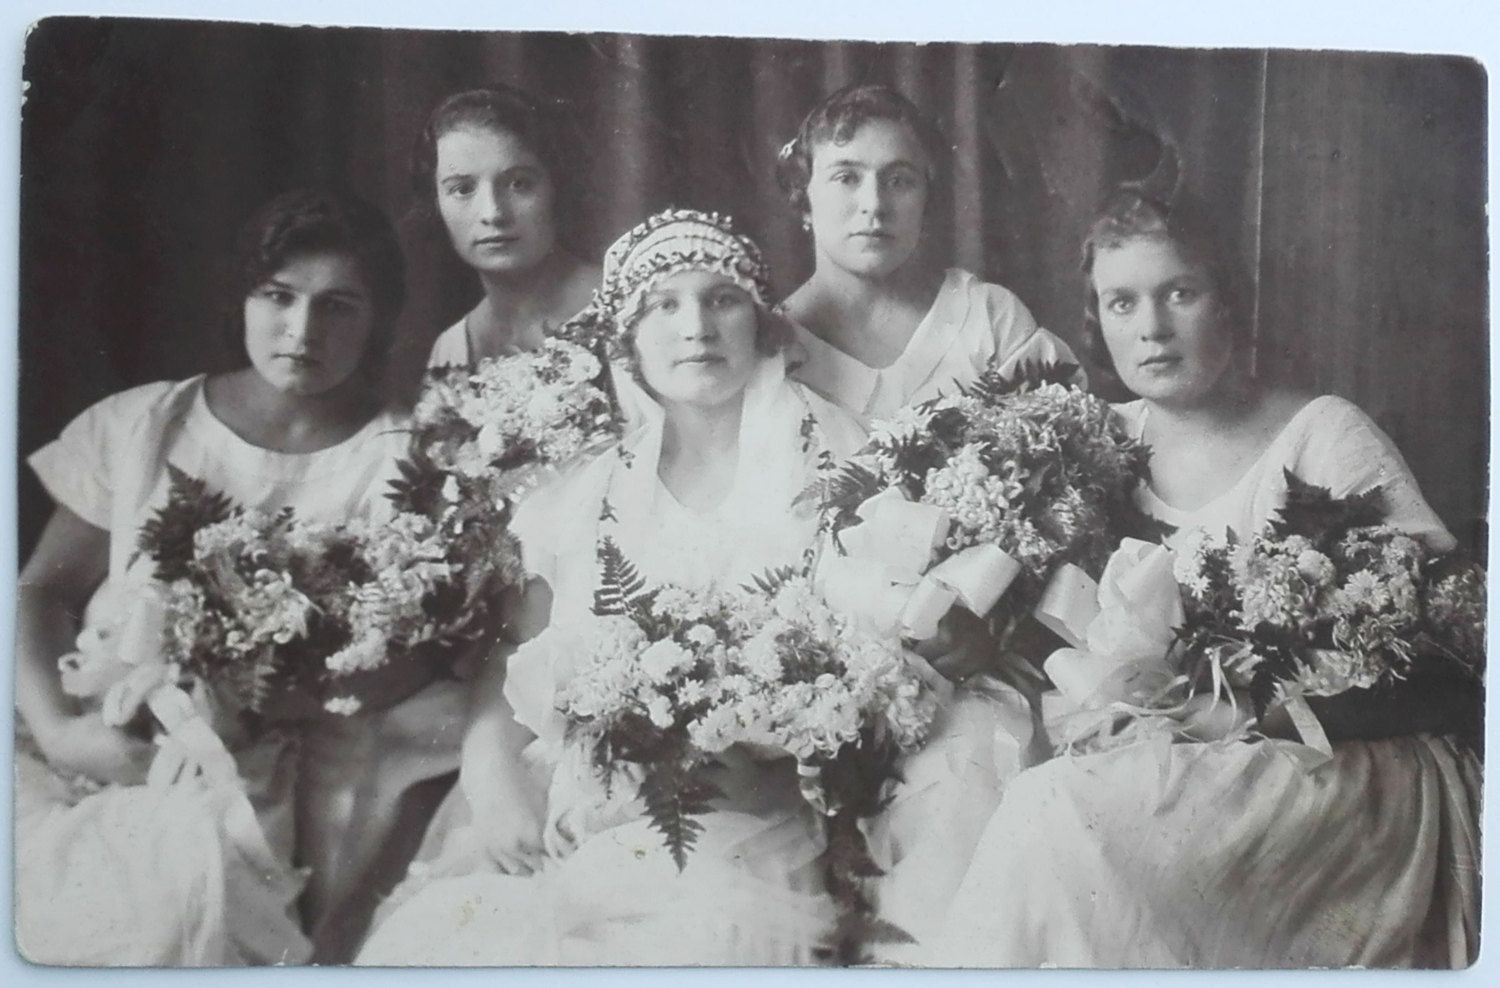 Soviet marriage 1925 Image public domain